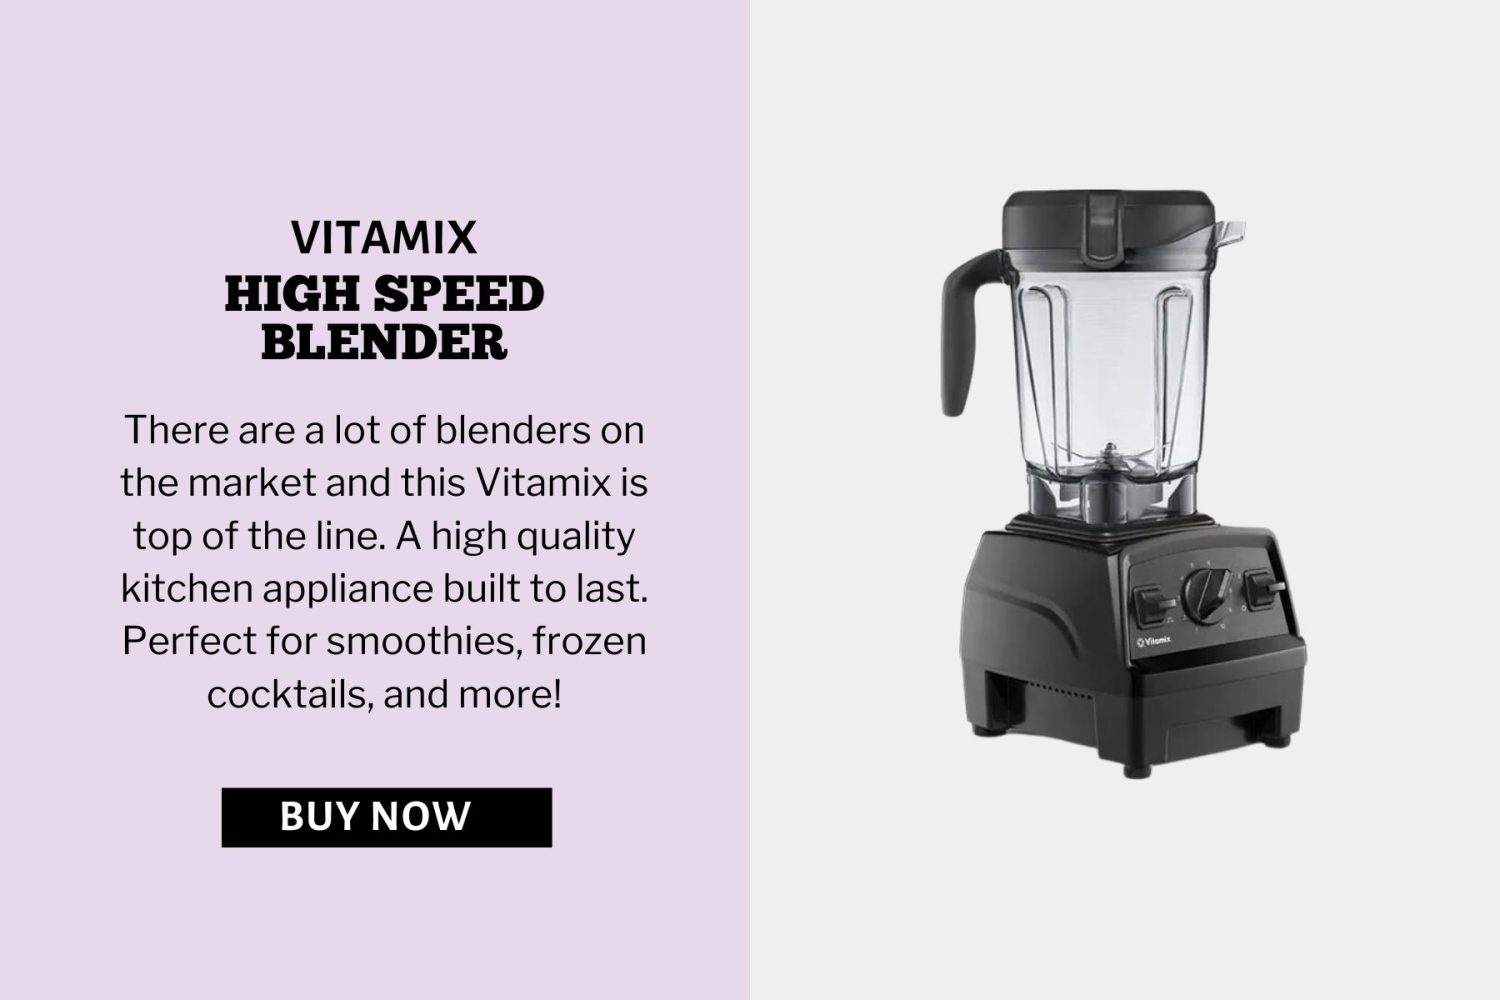 Vitamix Blender Product Image.